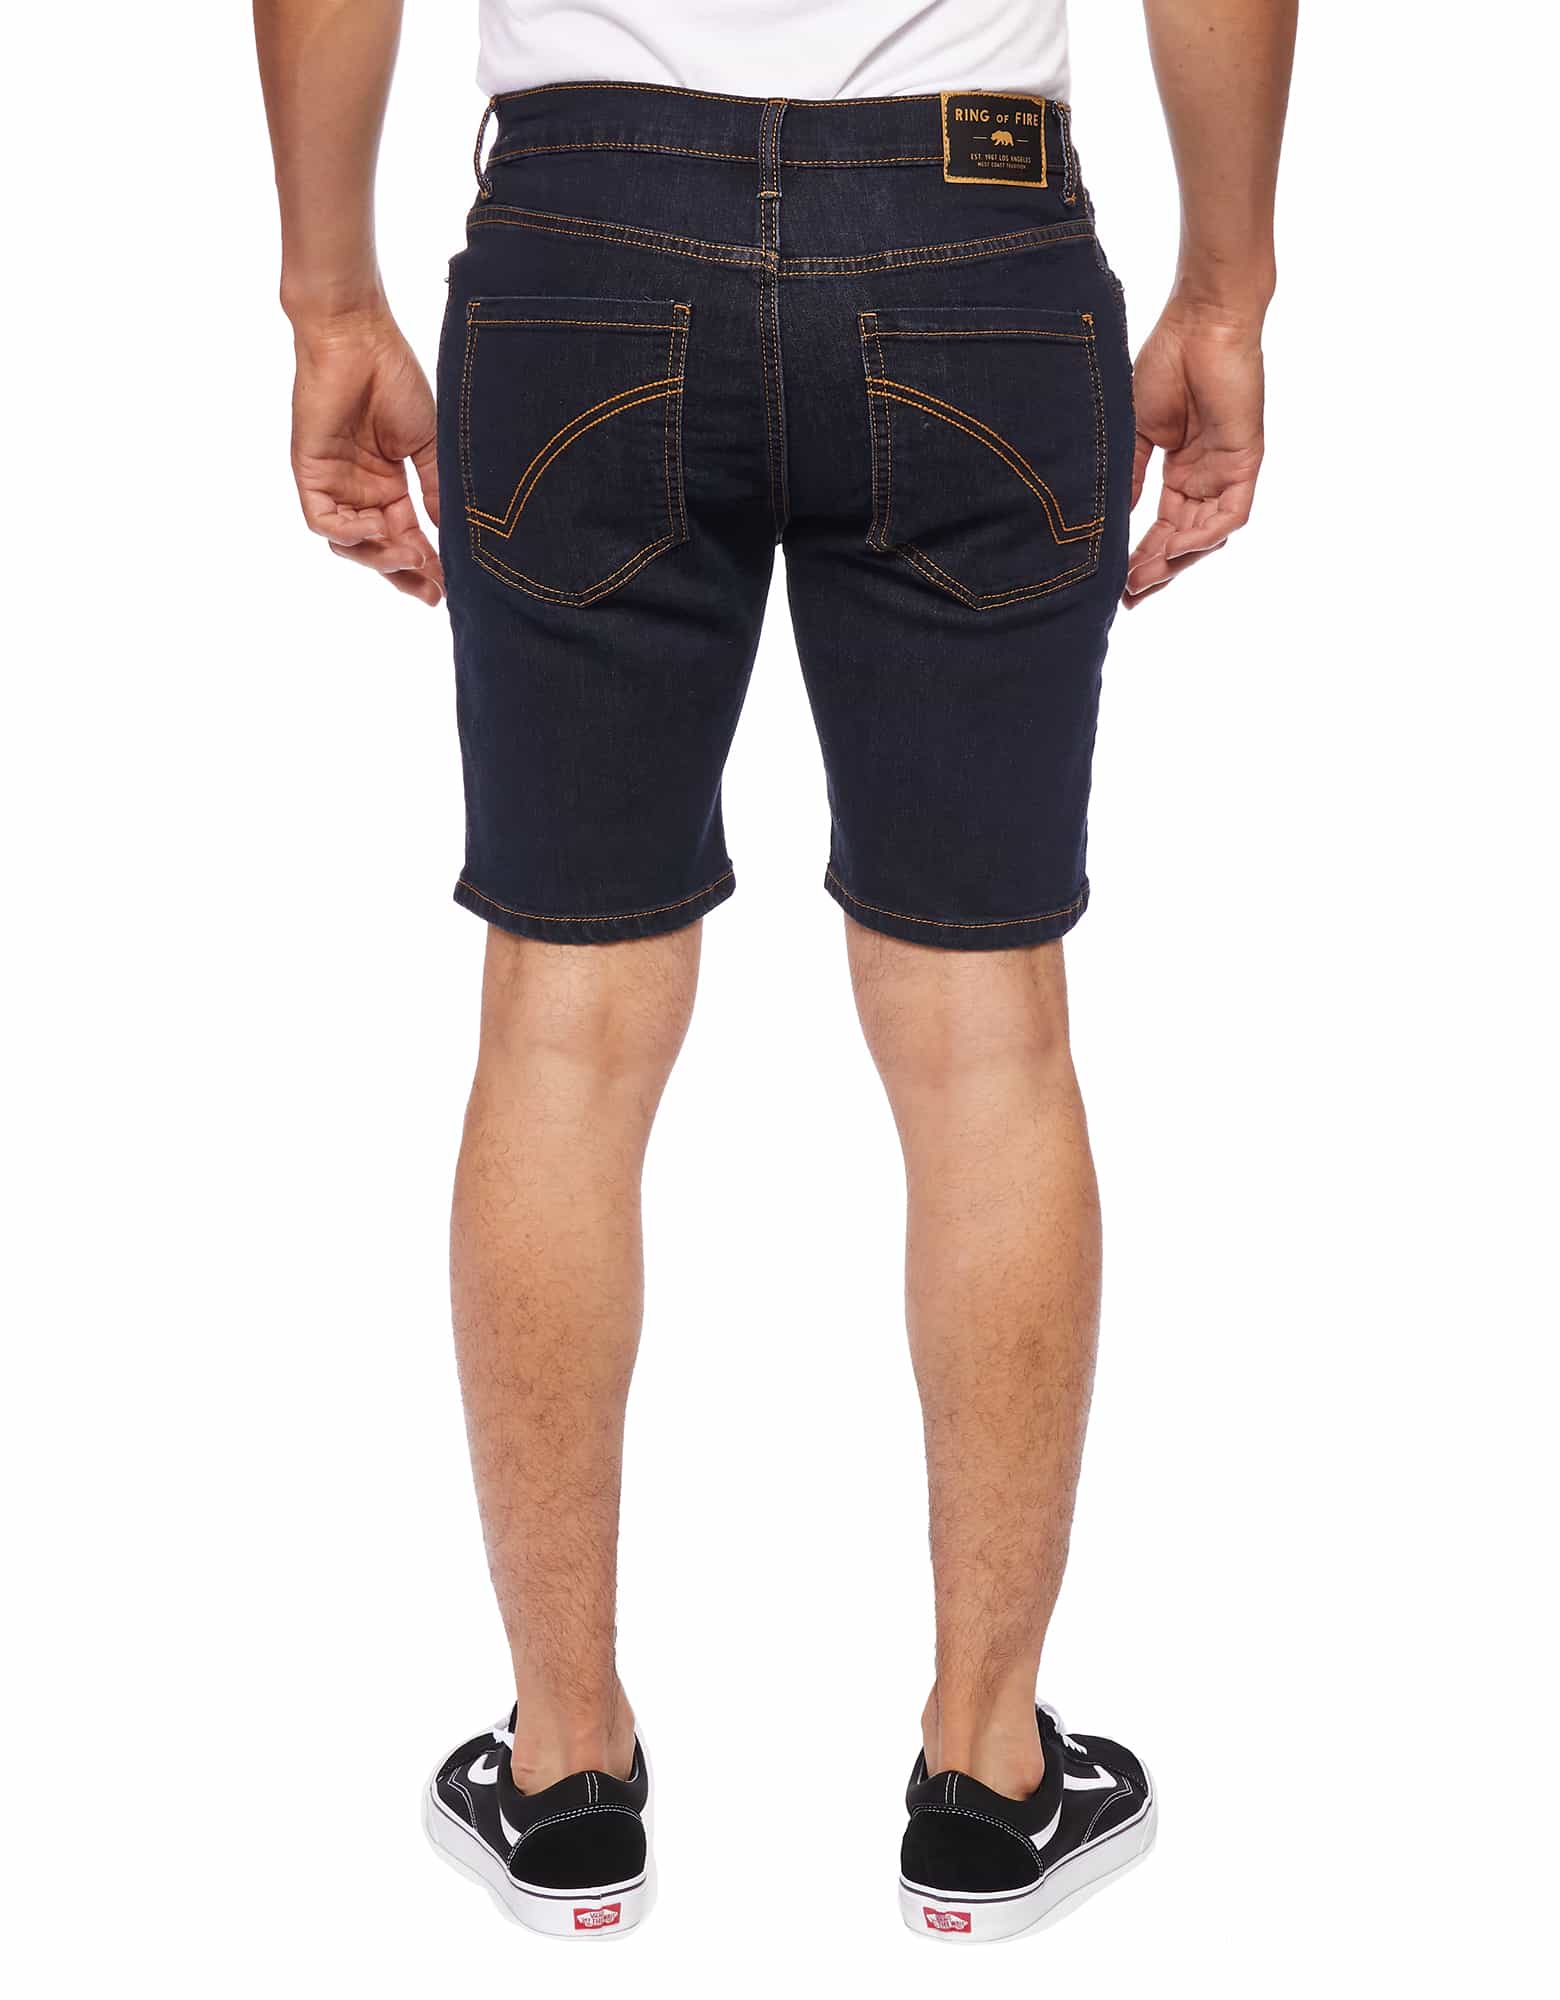 Mens zip up button closure slick denim shorts in Rinse back pockets 